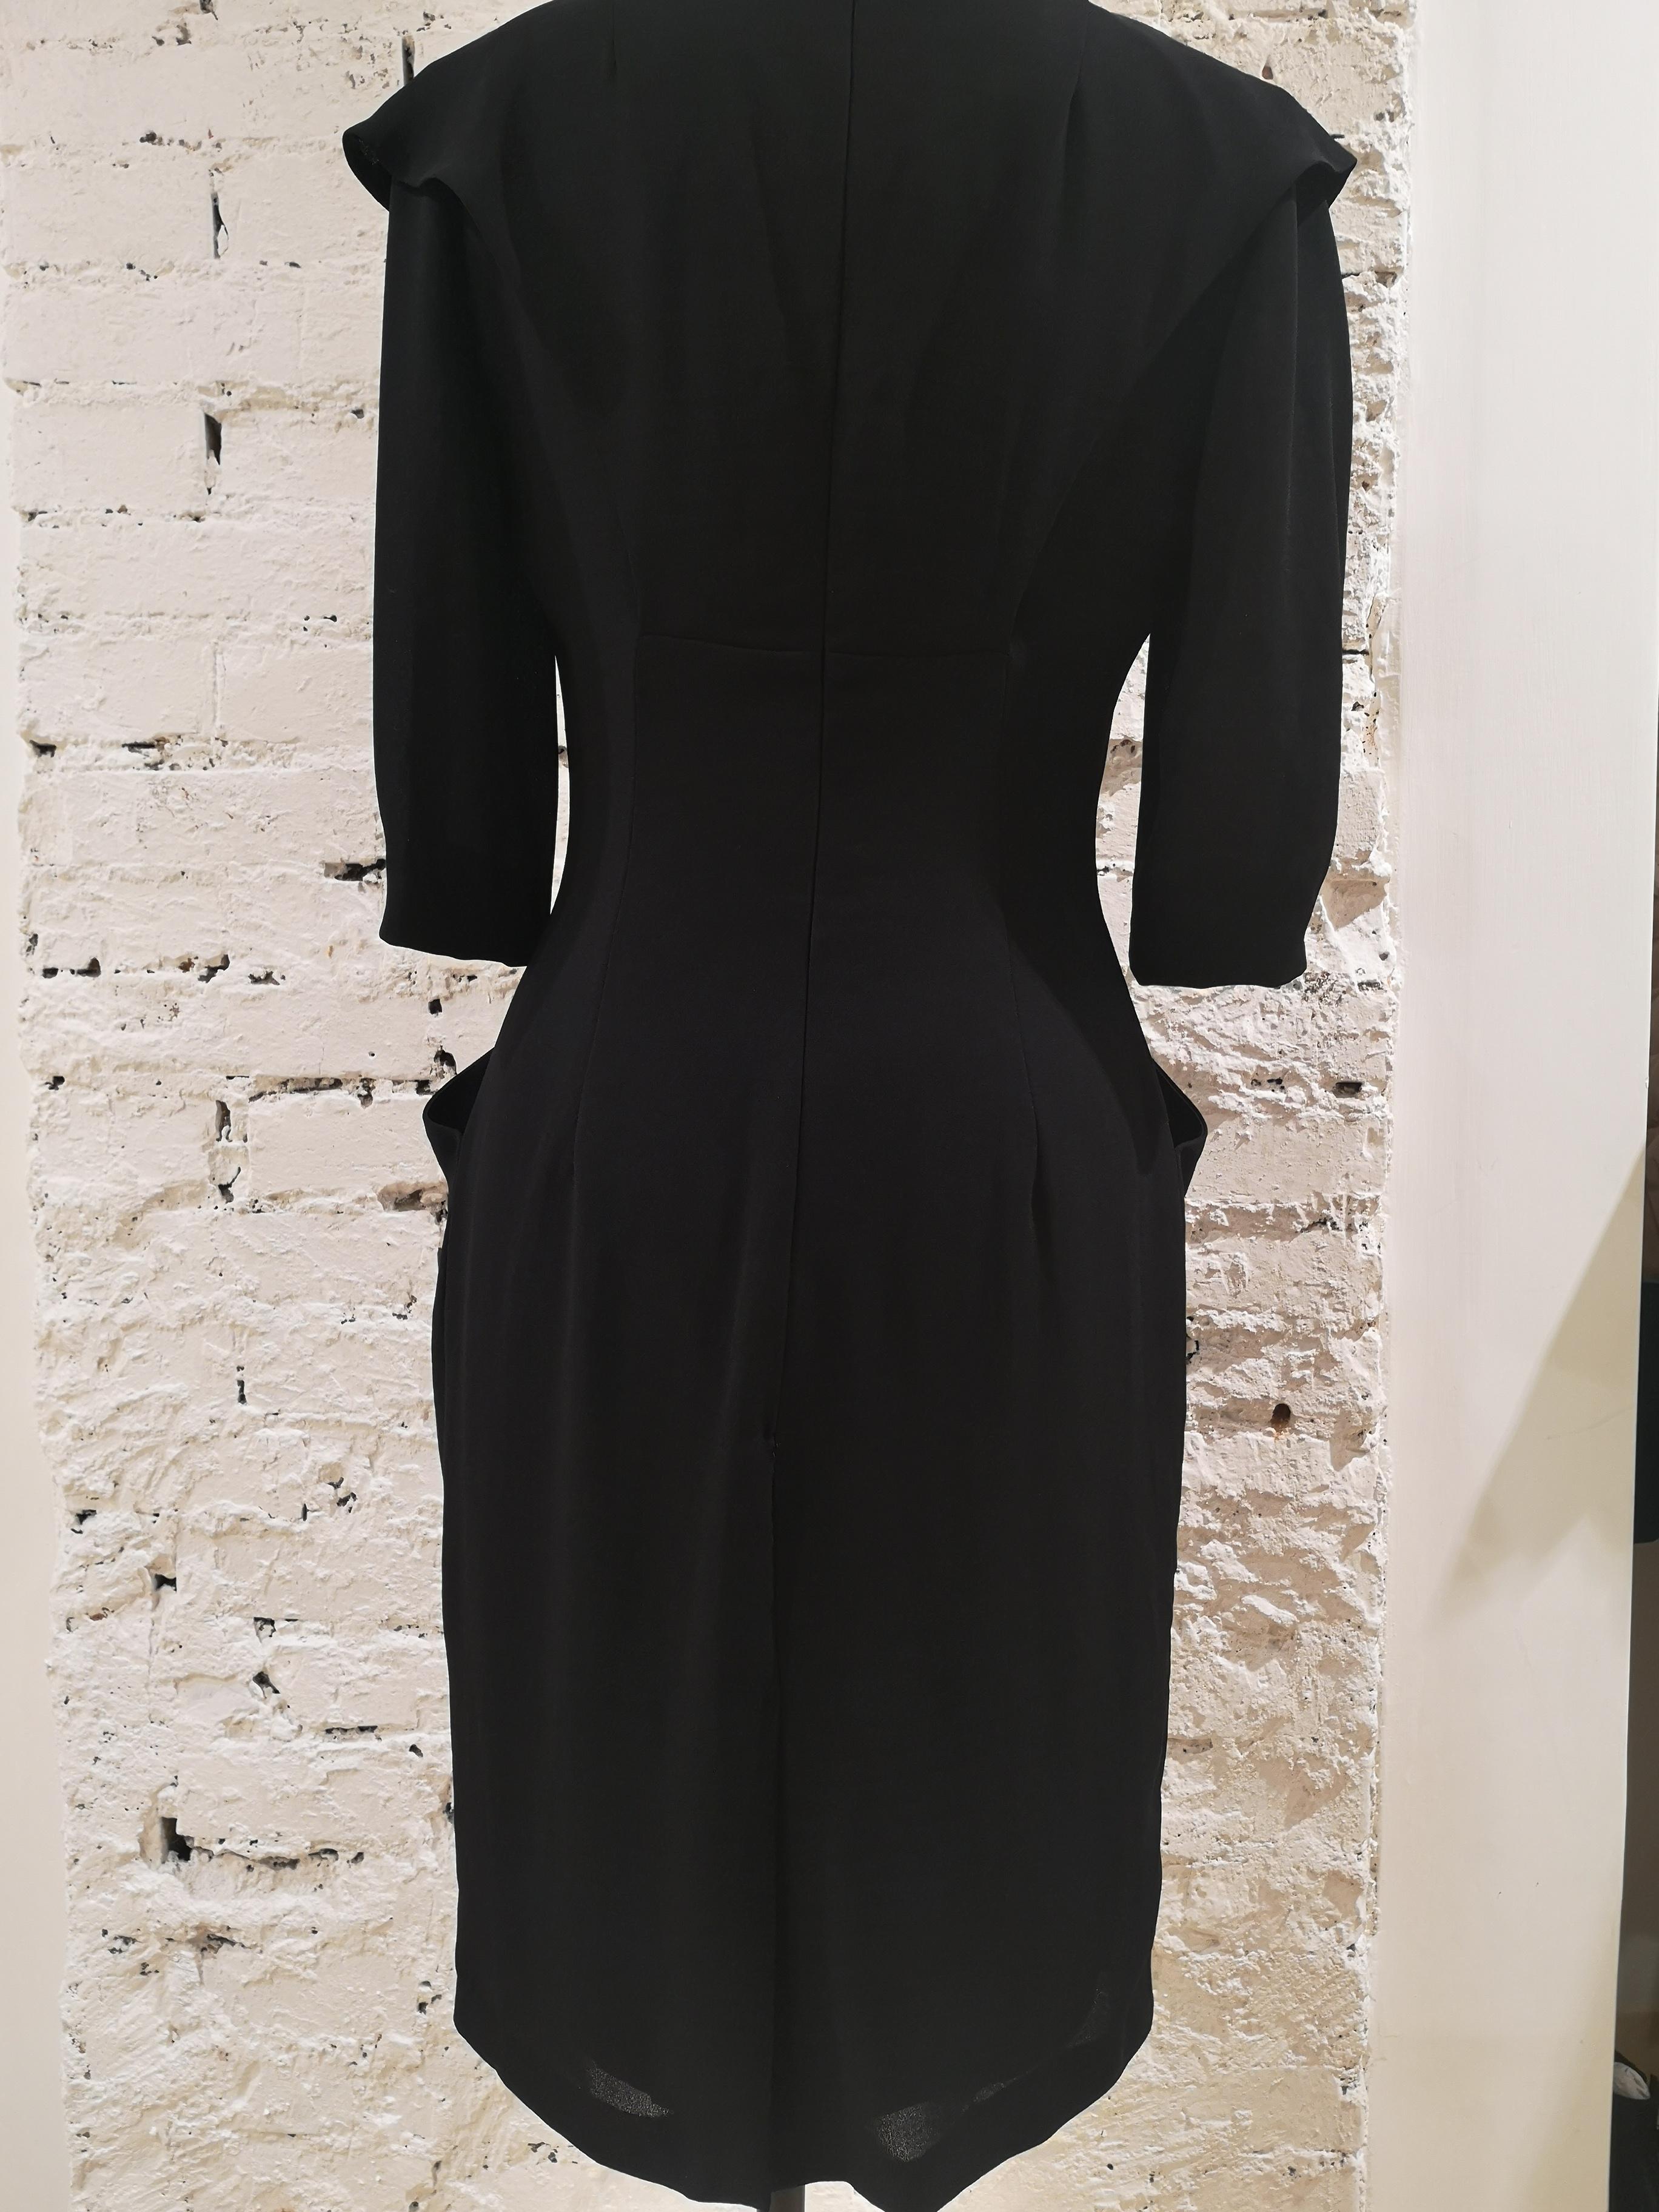 Prada black dress 3